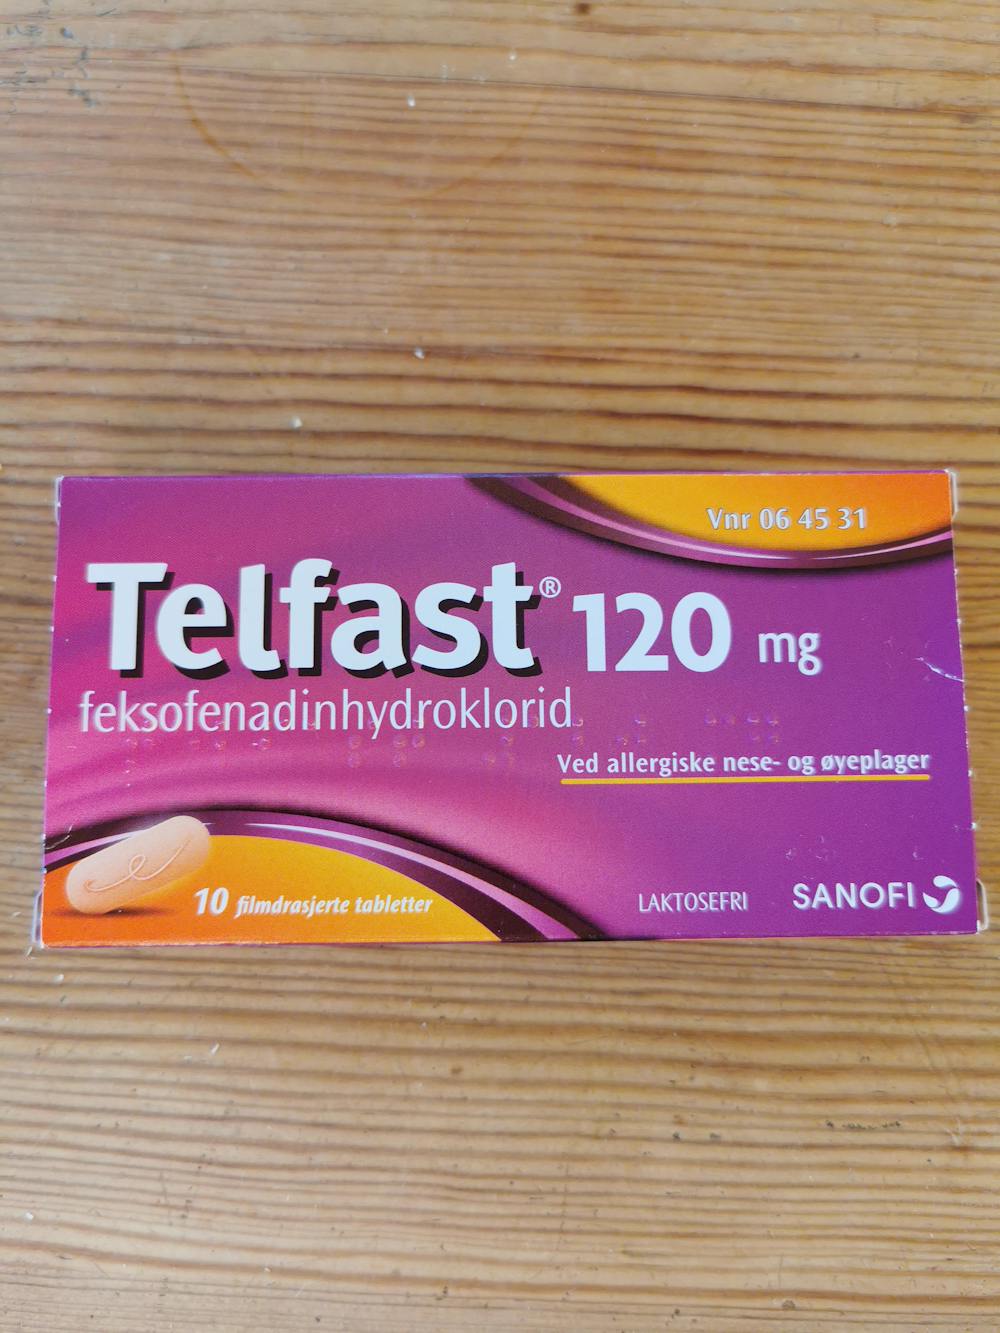 Telfast 120 mg, Sanofi-aventis